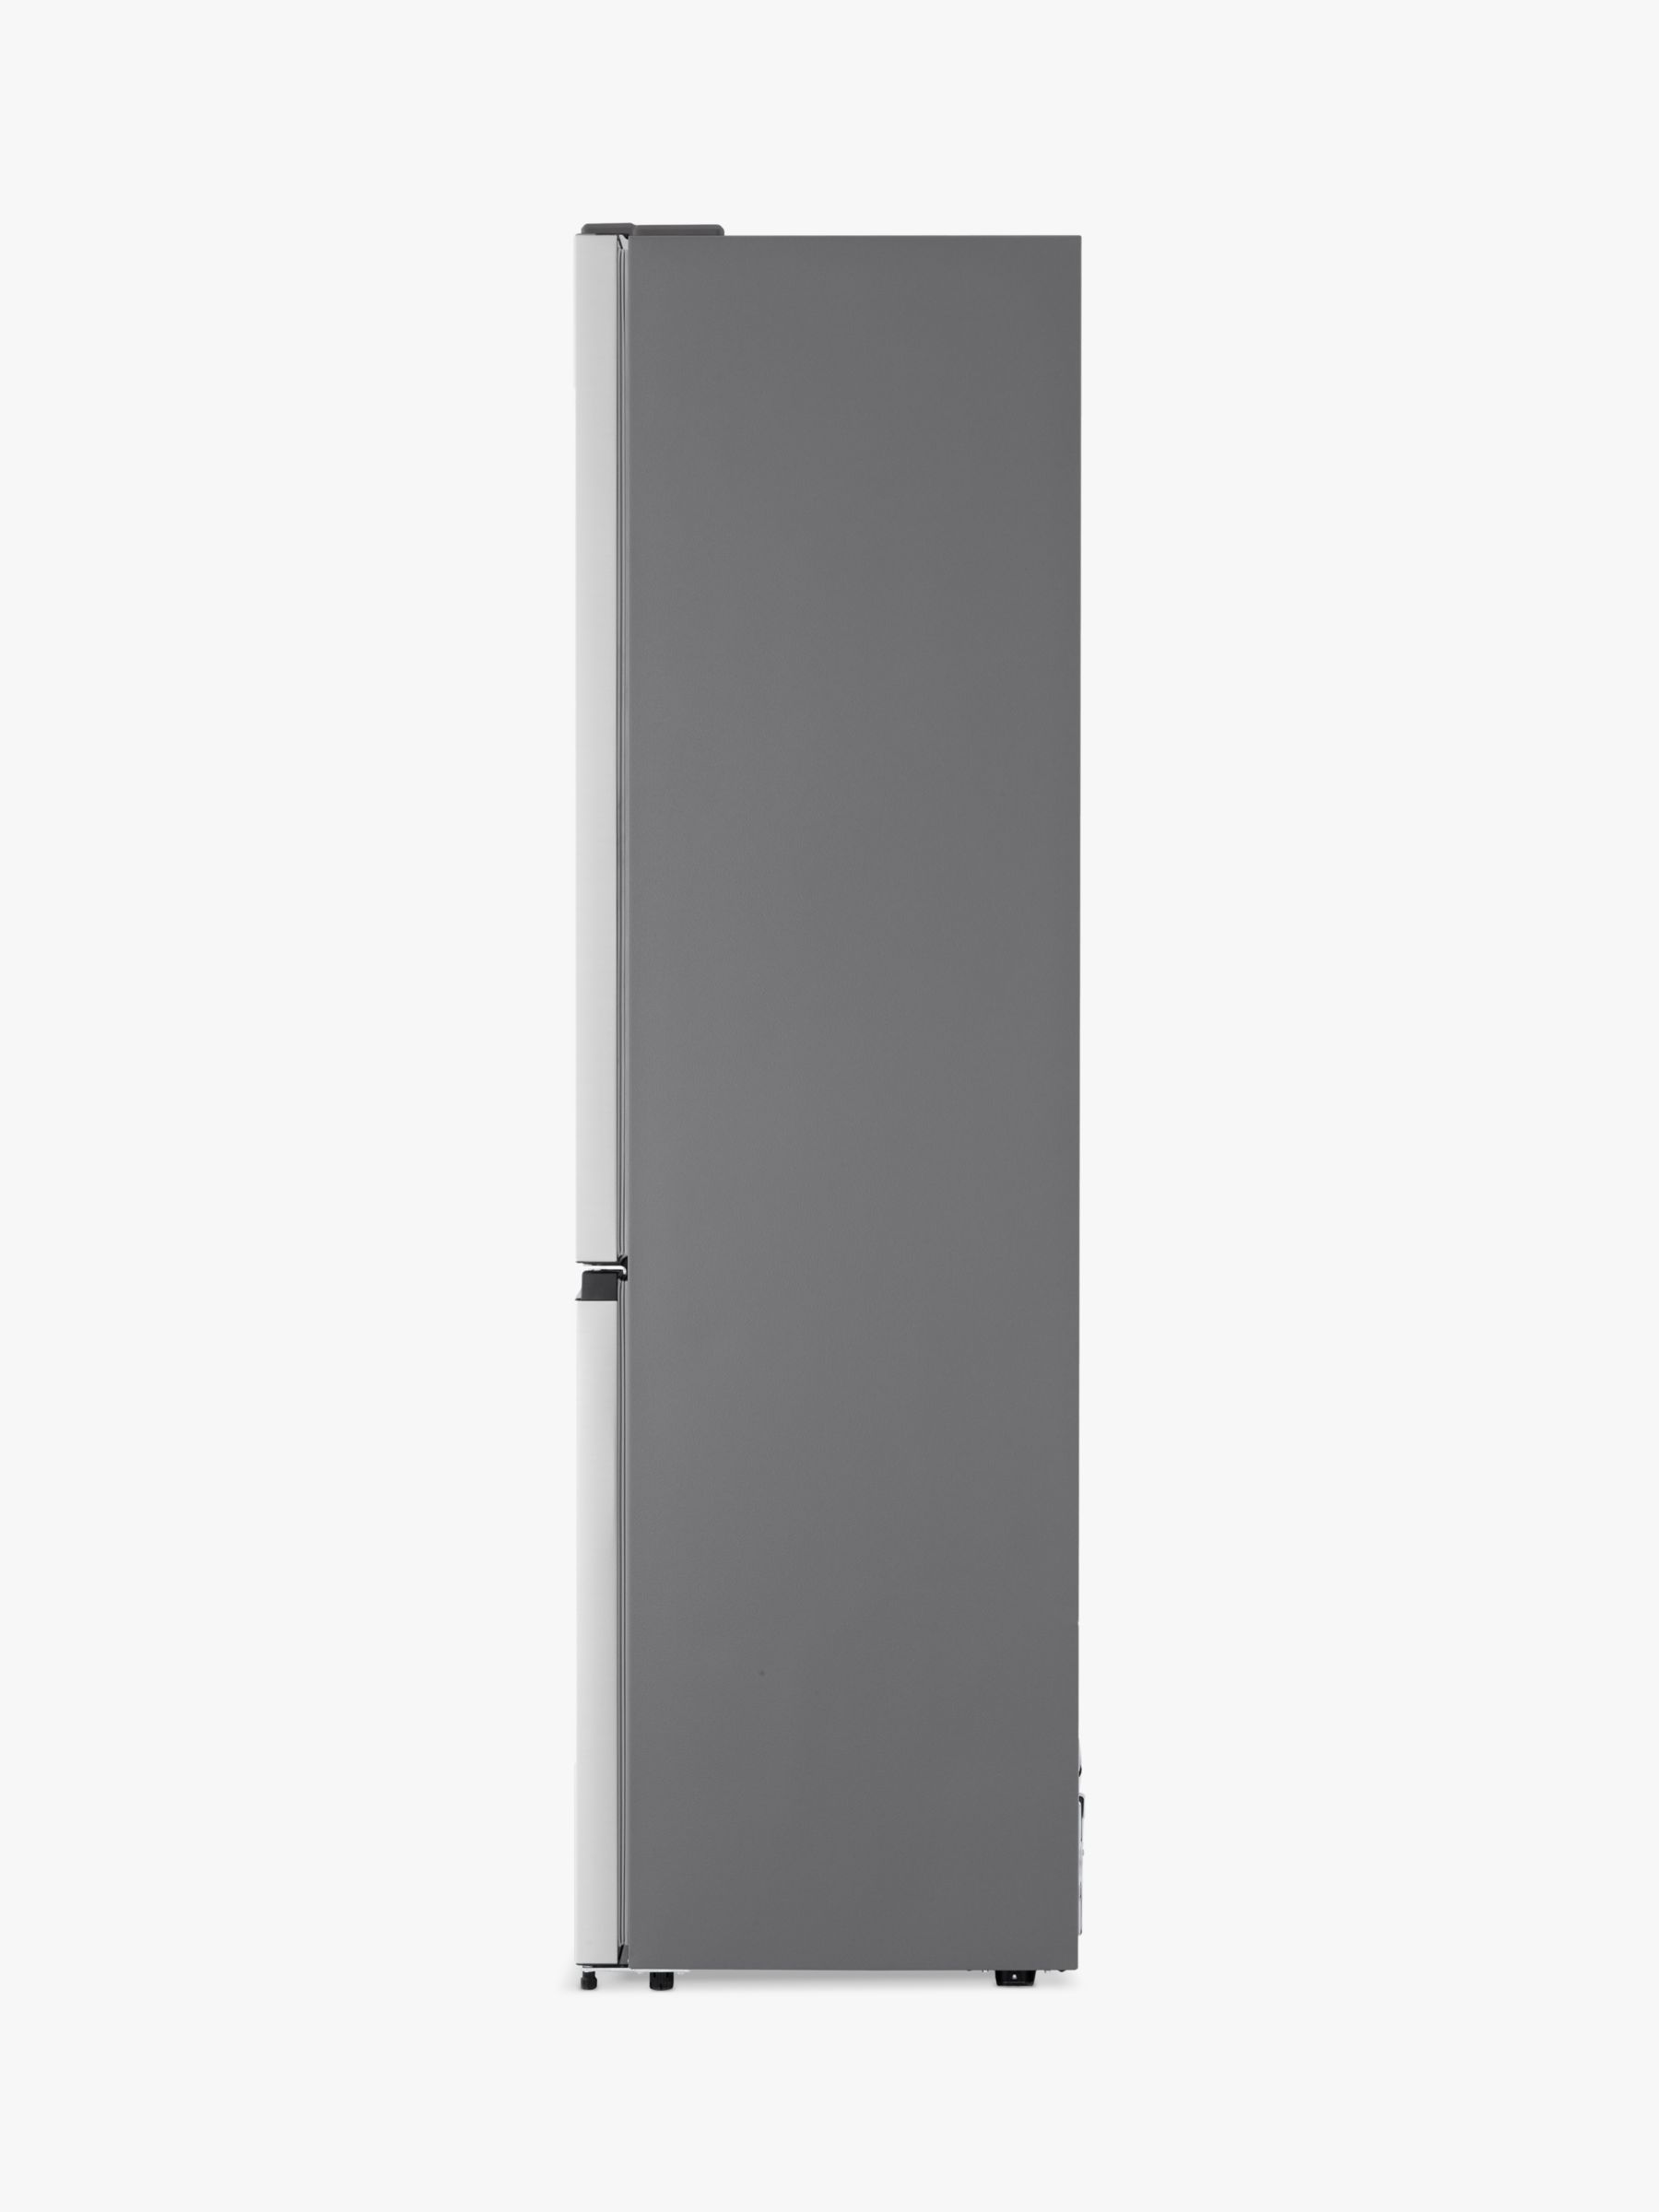 GBM22HSADH Silver Freezer, Fridge Freestanding LG 70/30